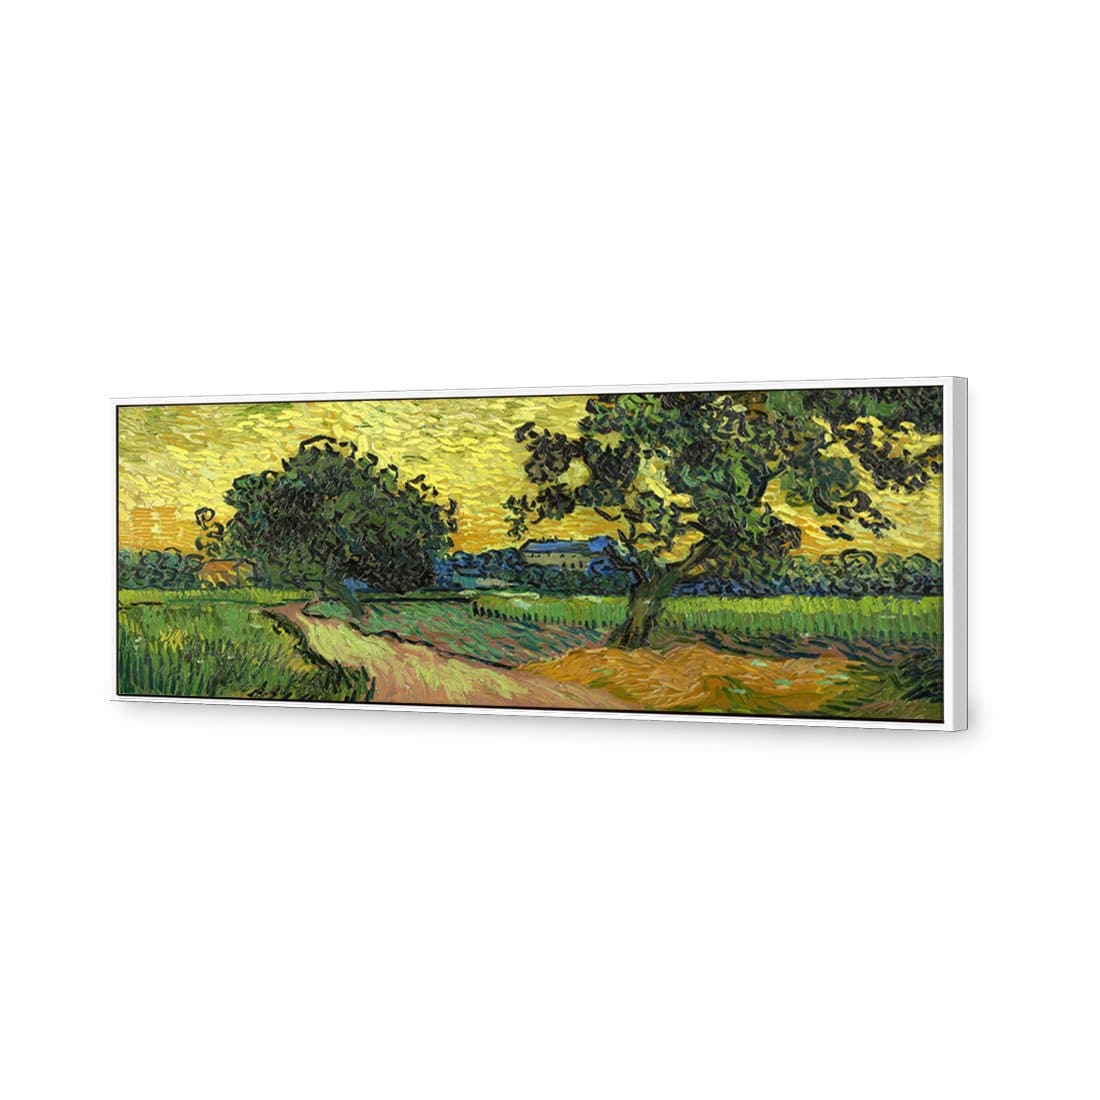 Landscape At Twilight - Van Gogh Canvas Art-Canvas-Wall Art Designs-60x20cm-Canvas - White Frame-Wall Art Designs